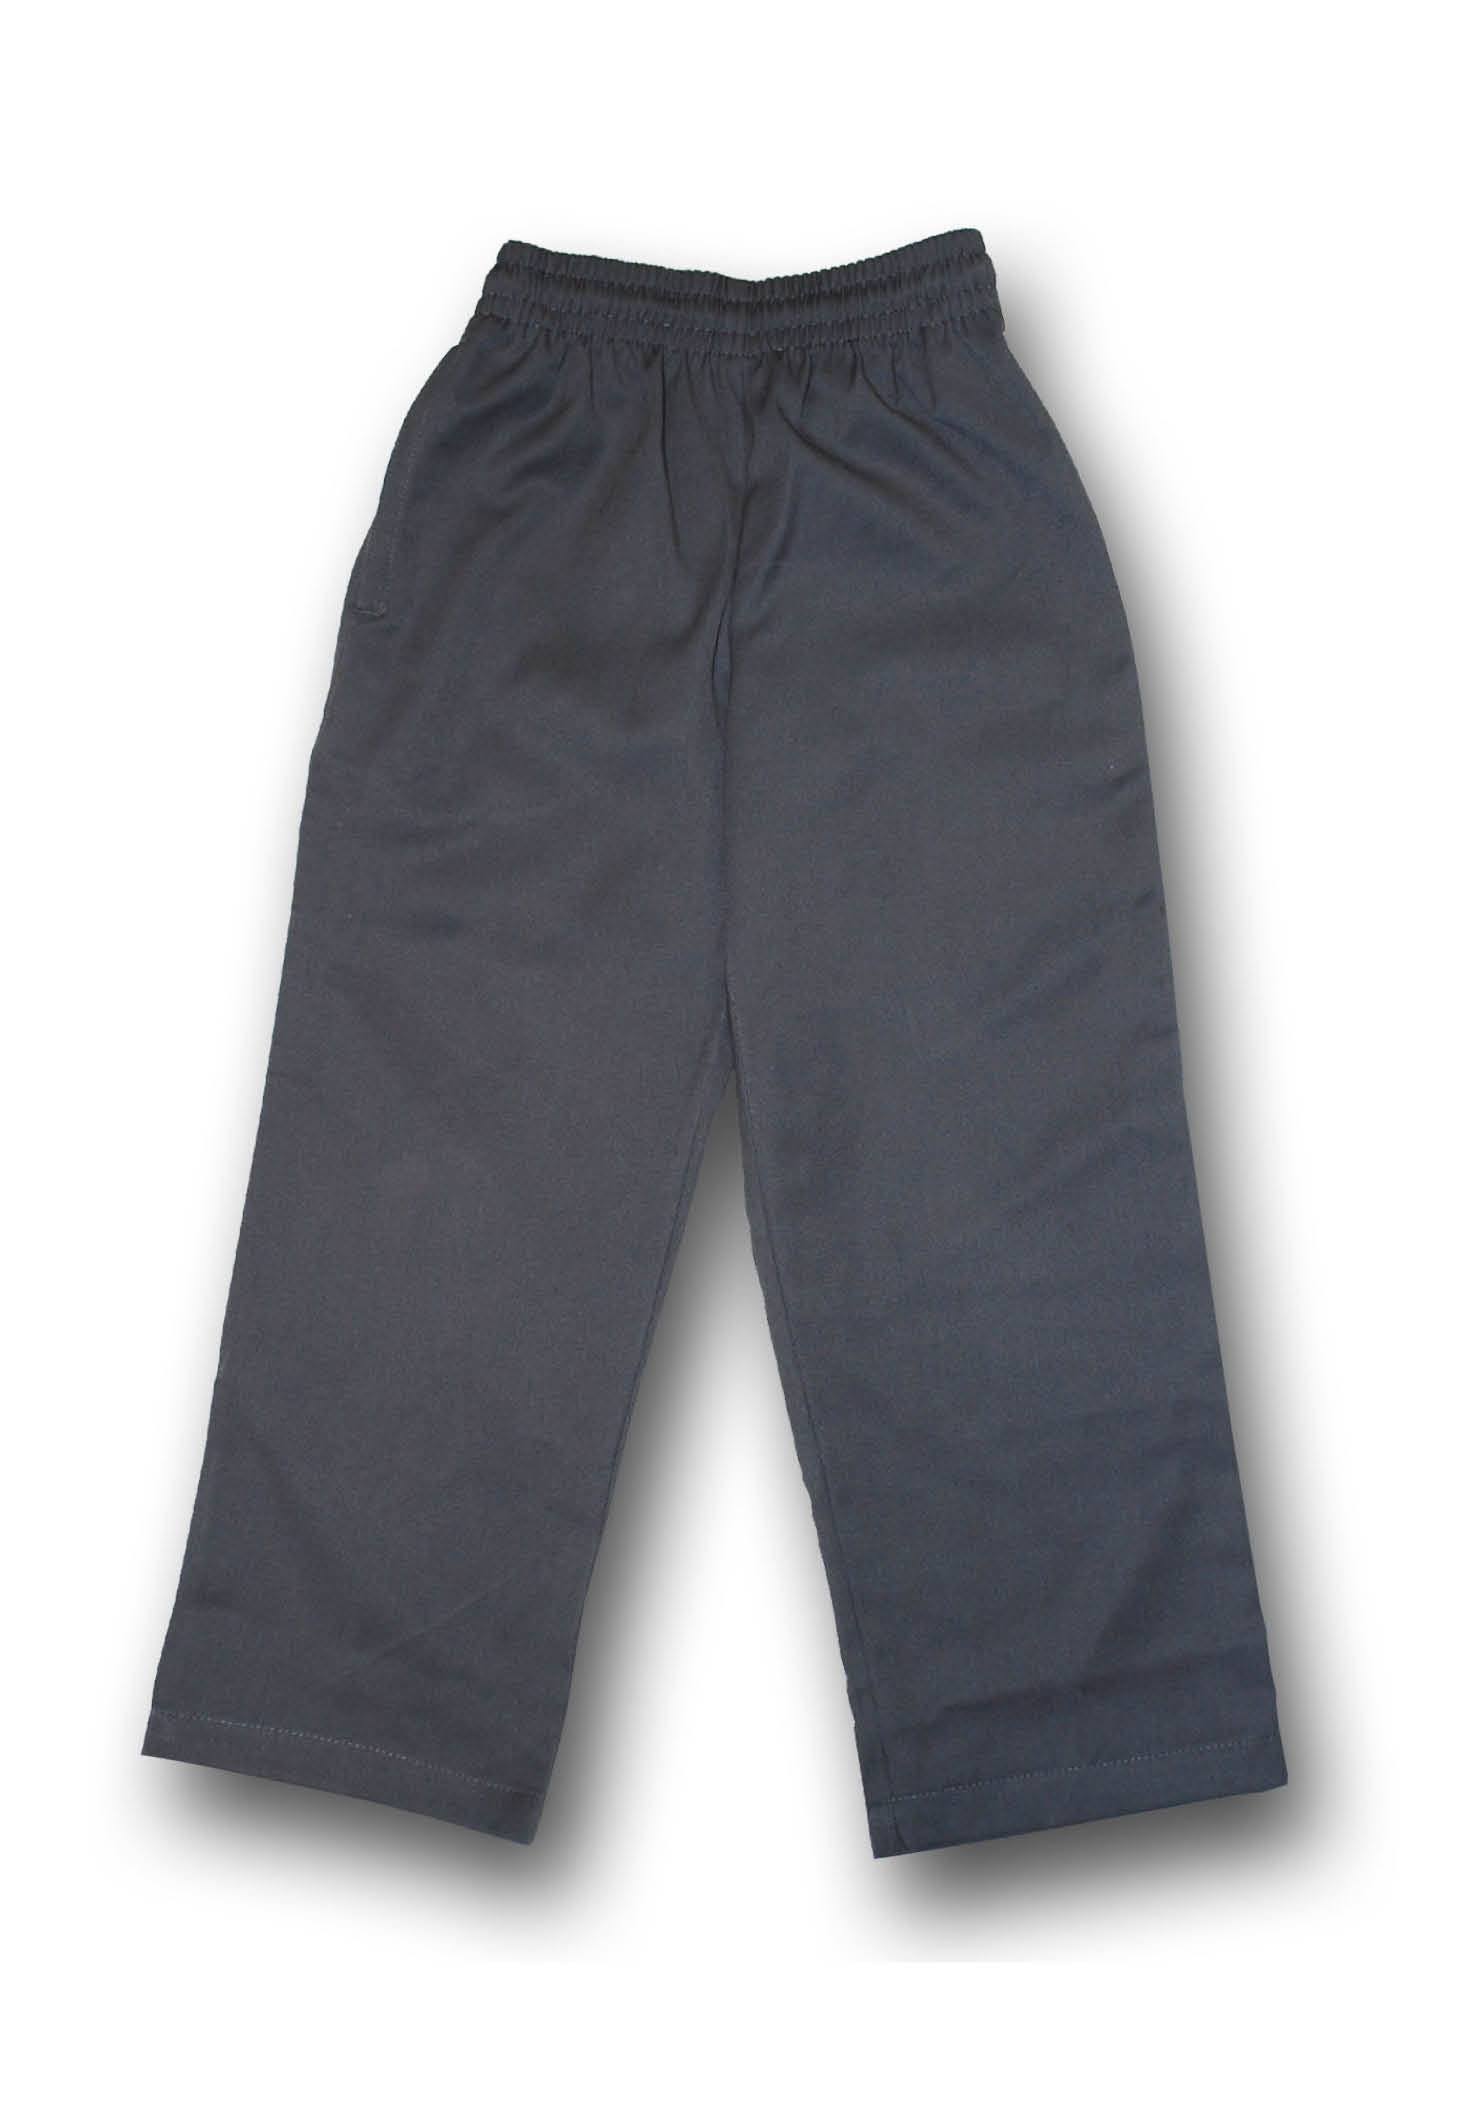 St Catherine's Boys Elastic Waist Pants | Shop at Pickles Schoolwear ...